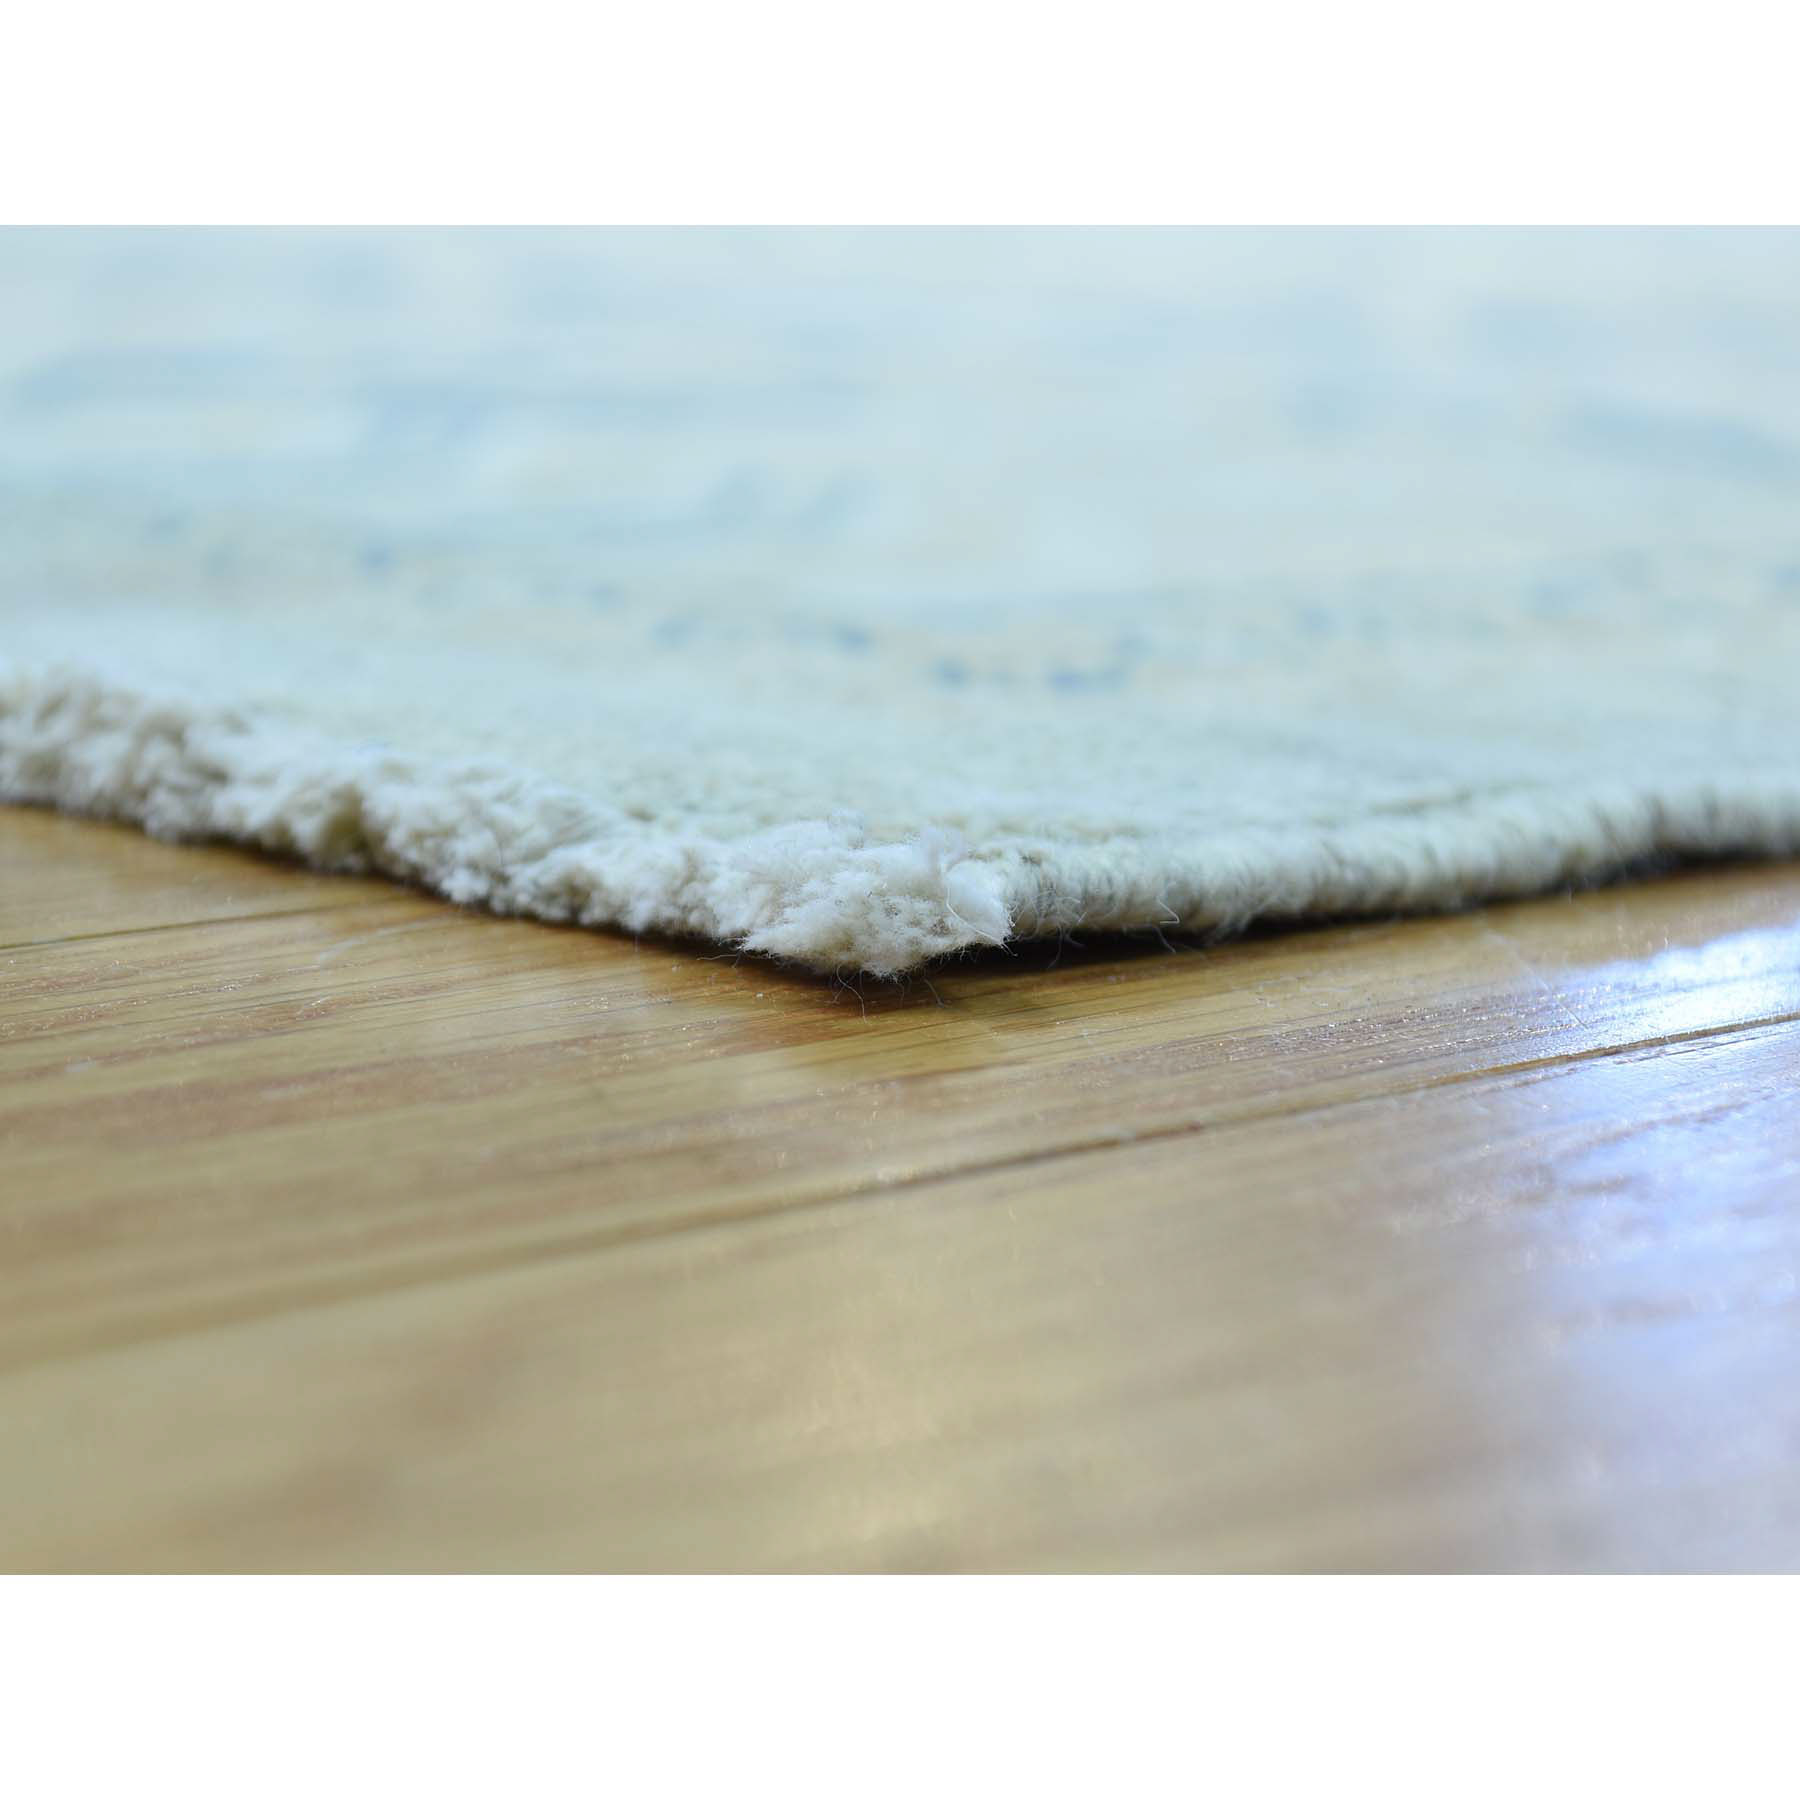 13-1 x17-7  White Wash Khotan Design Hand-Knotted Oriental Carpet 